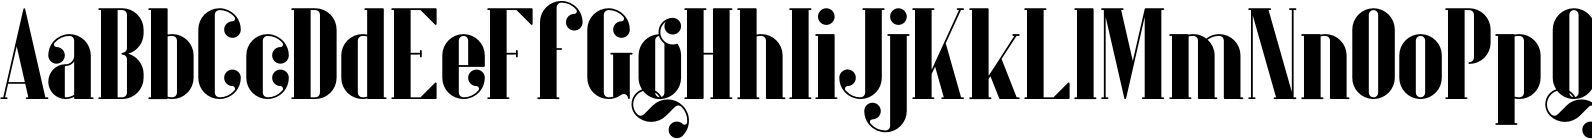 Inure Serif Typeface